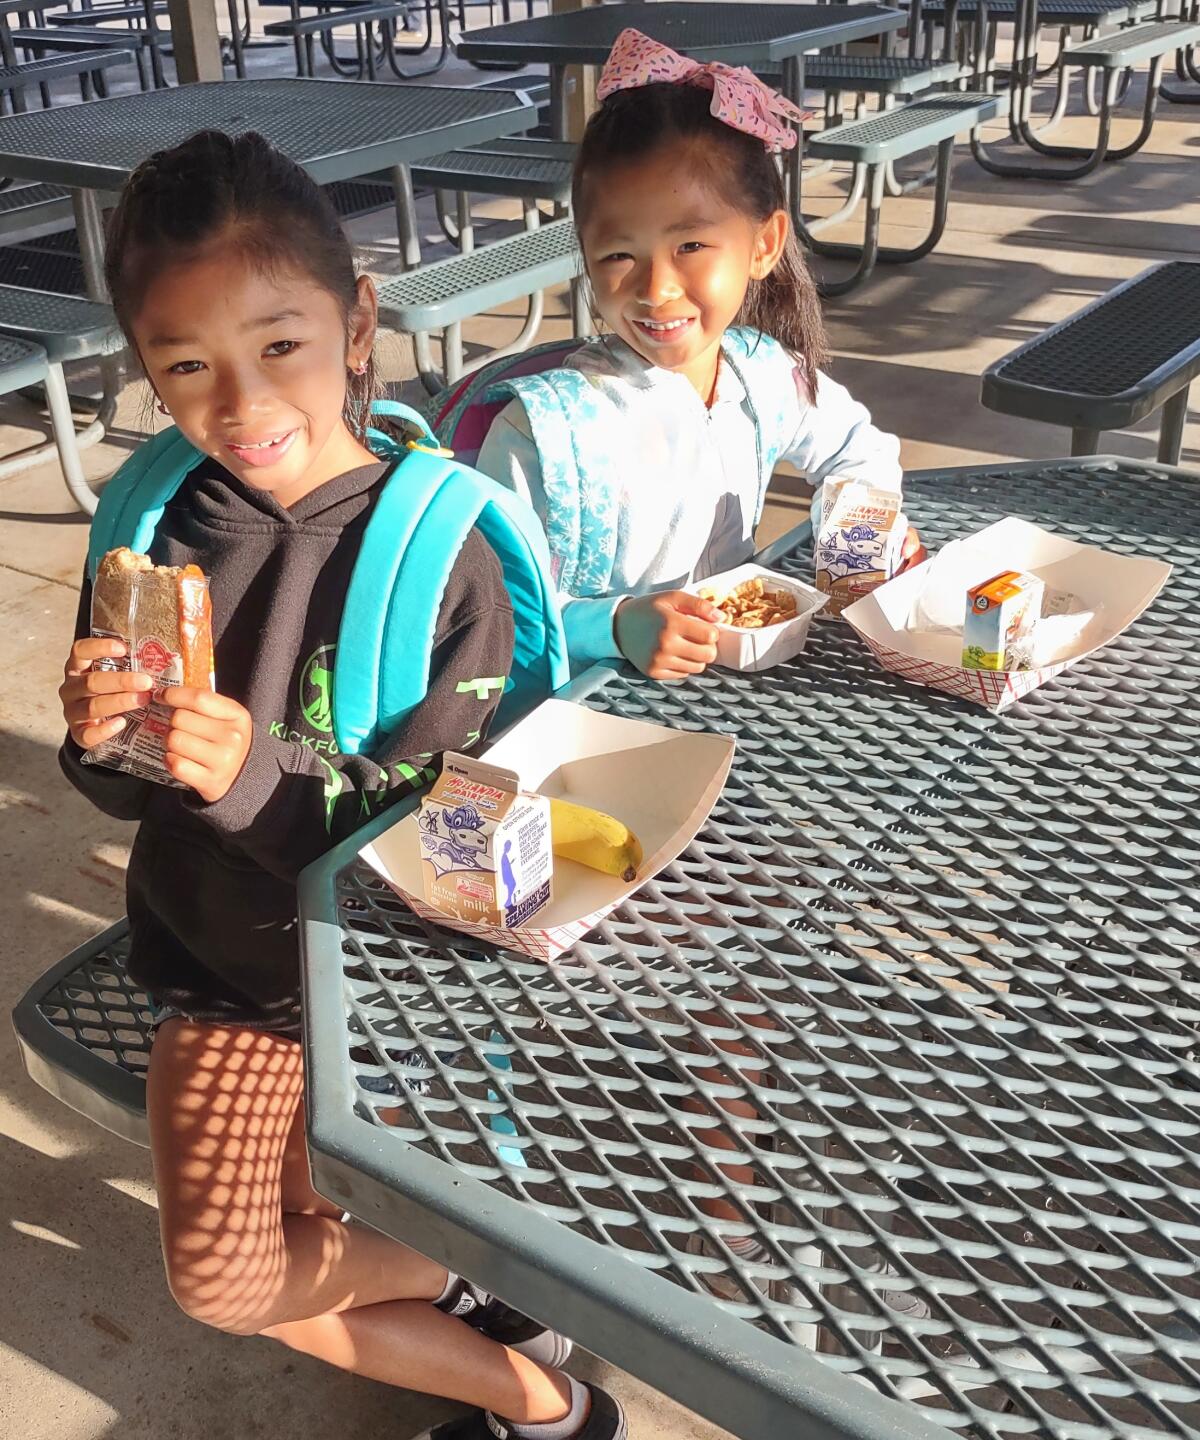 Leona Lansang, 7, left, and her sister Lillian Lansang, 6, have breakfast together at Garden Road Elementary School.